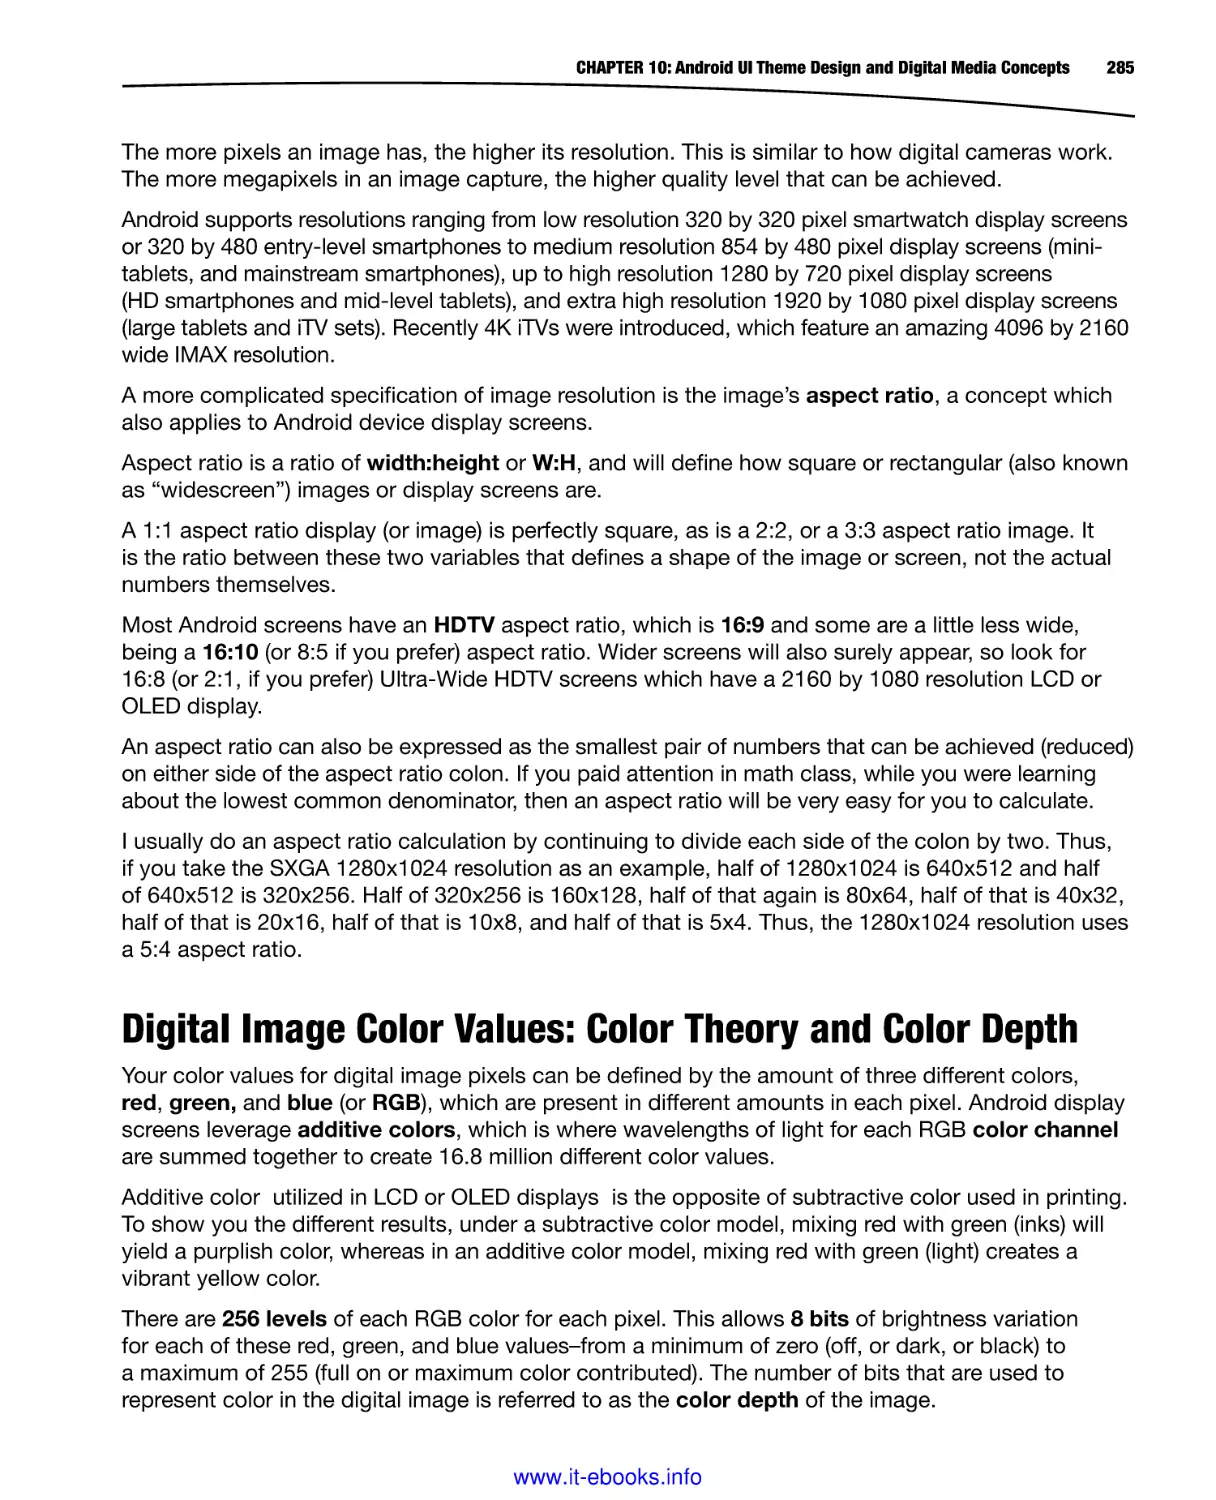 Digital Image Color Values